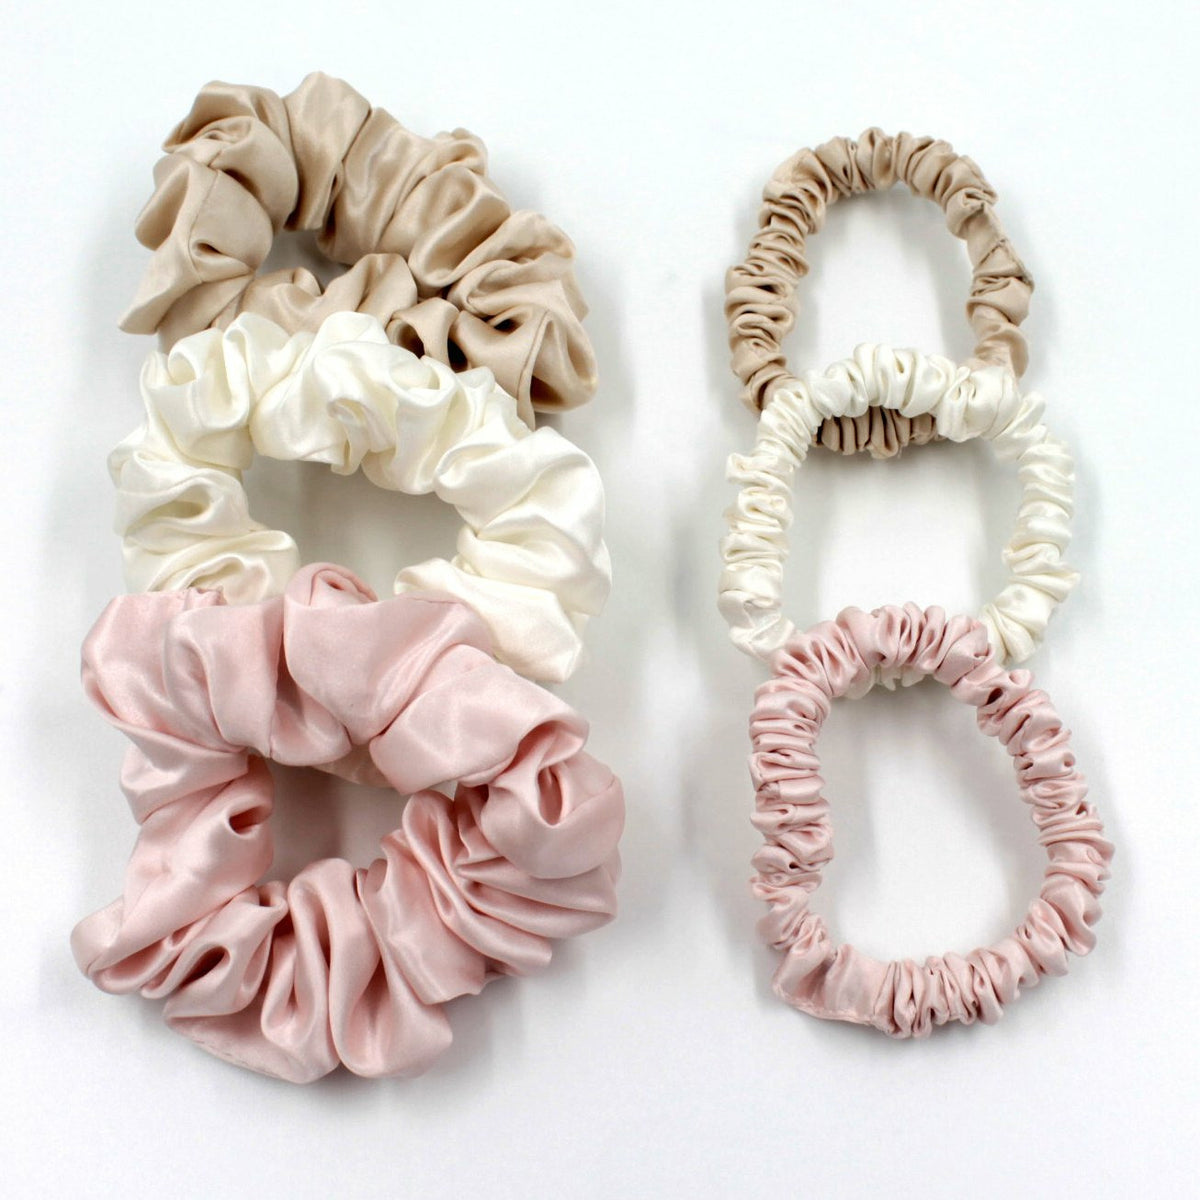 Mulberry Park Silks Charmeuse Silk Hair Scrunchies - Ivory/Pink/Sand